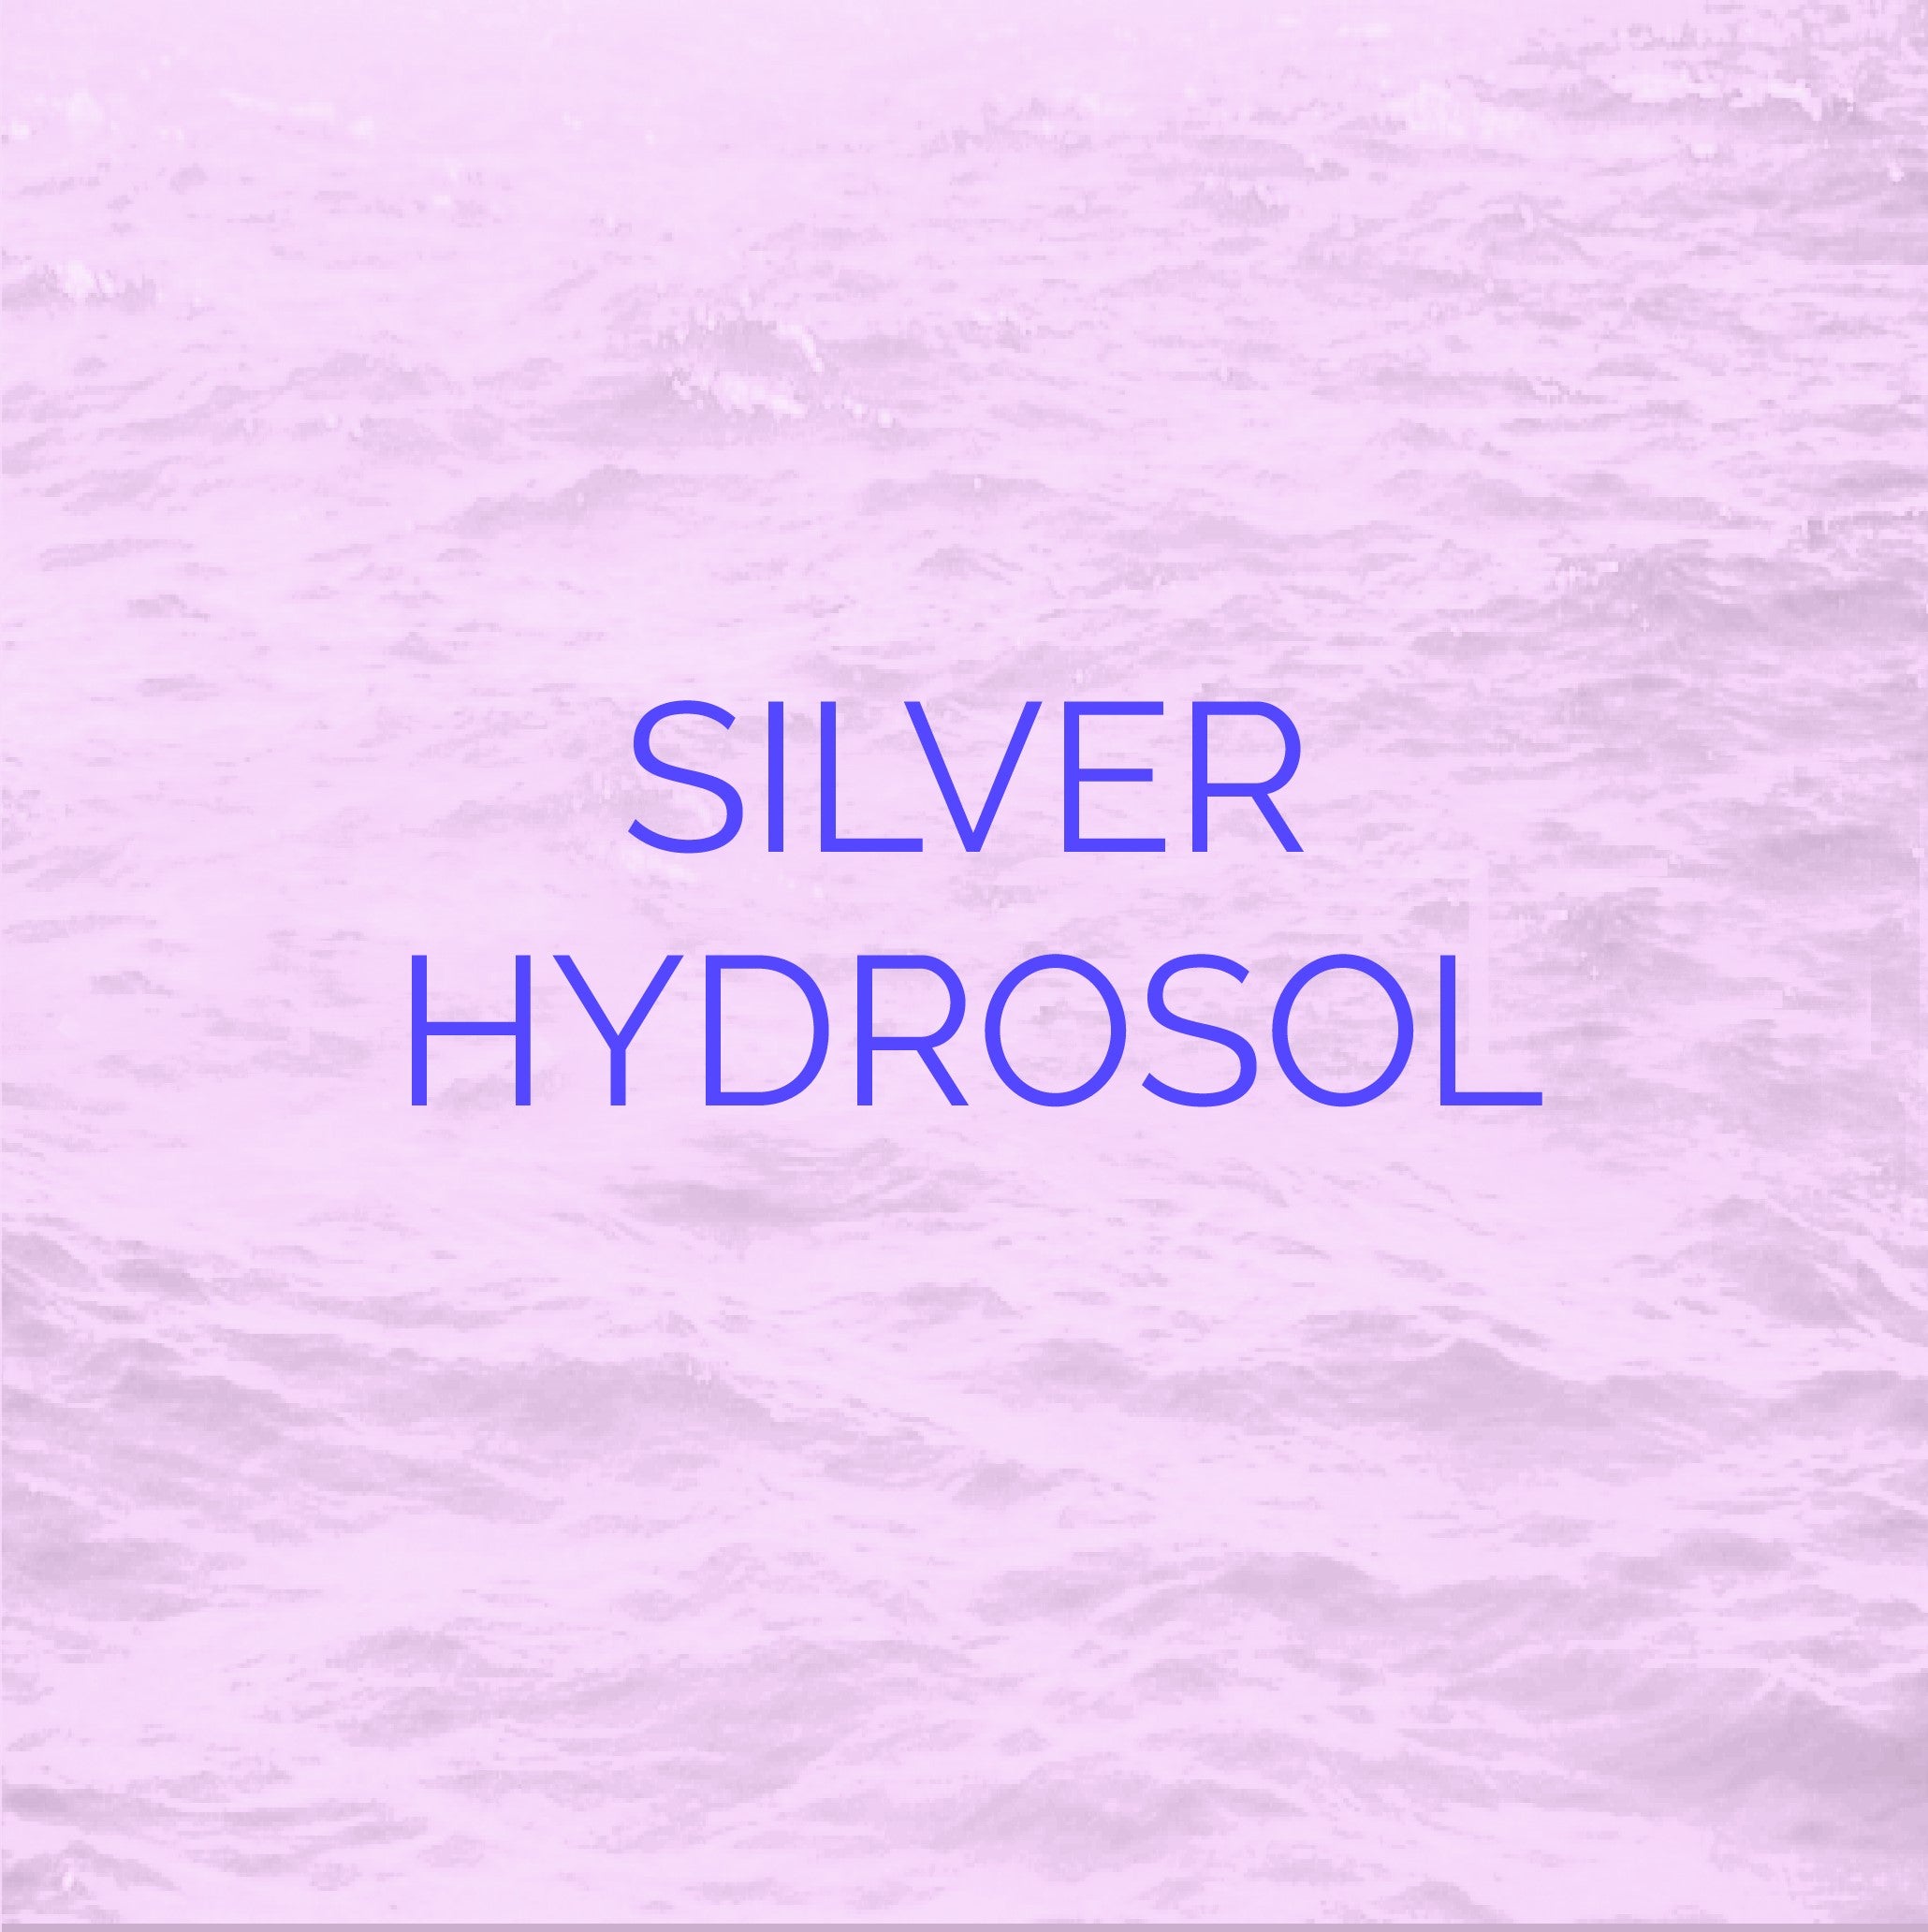 An icon representing Silver Hydrosol